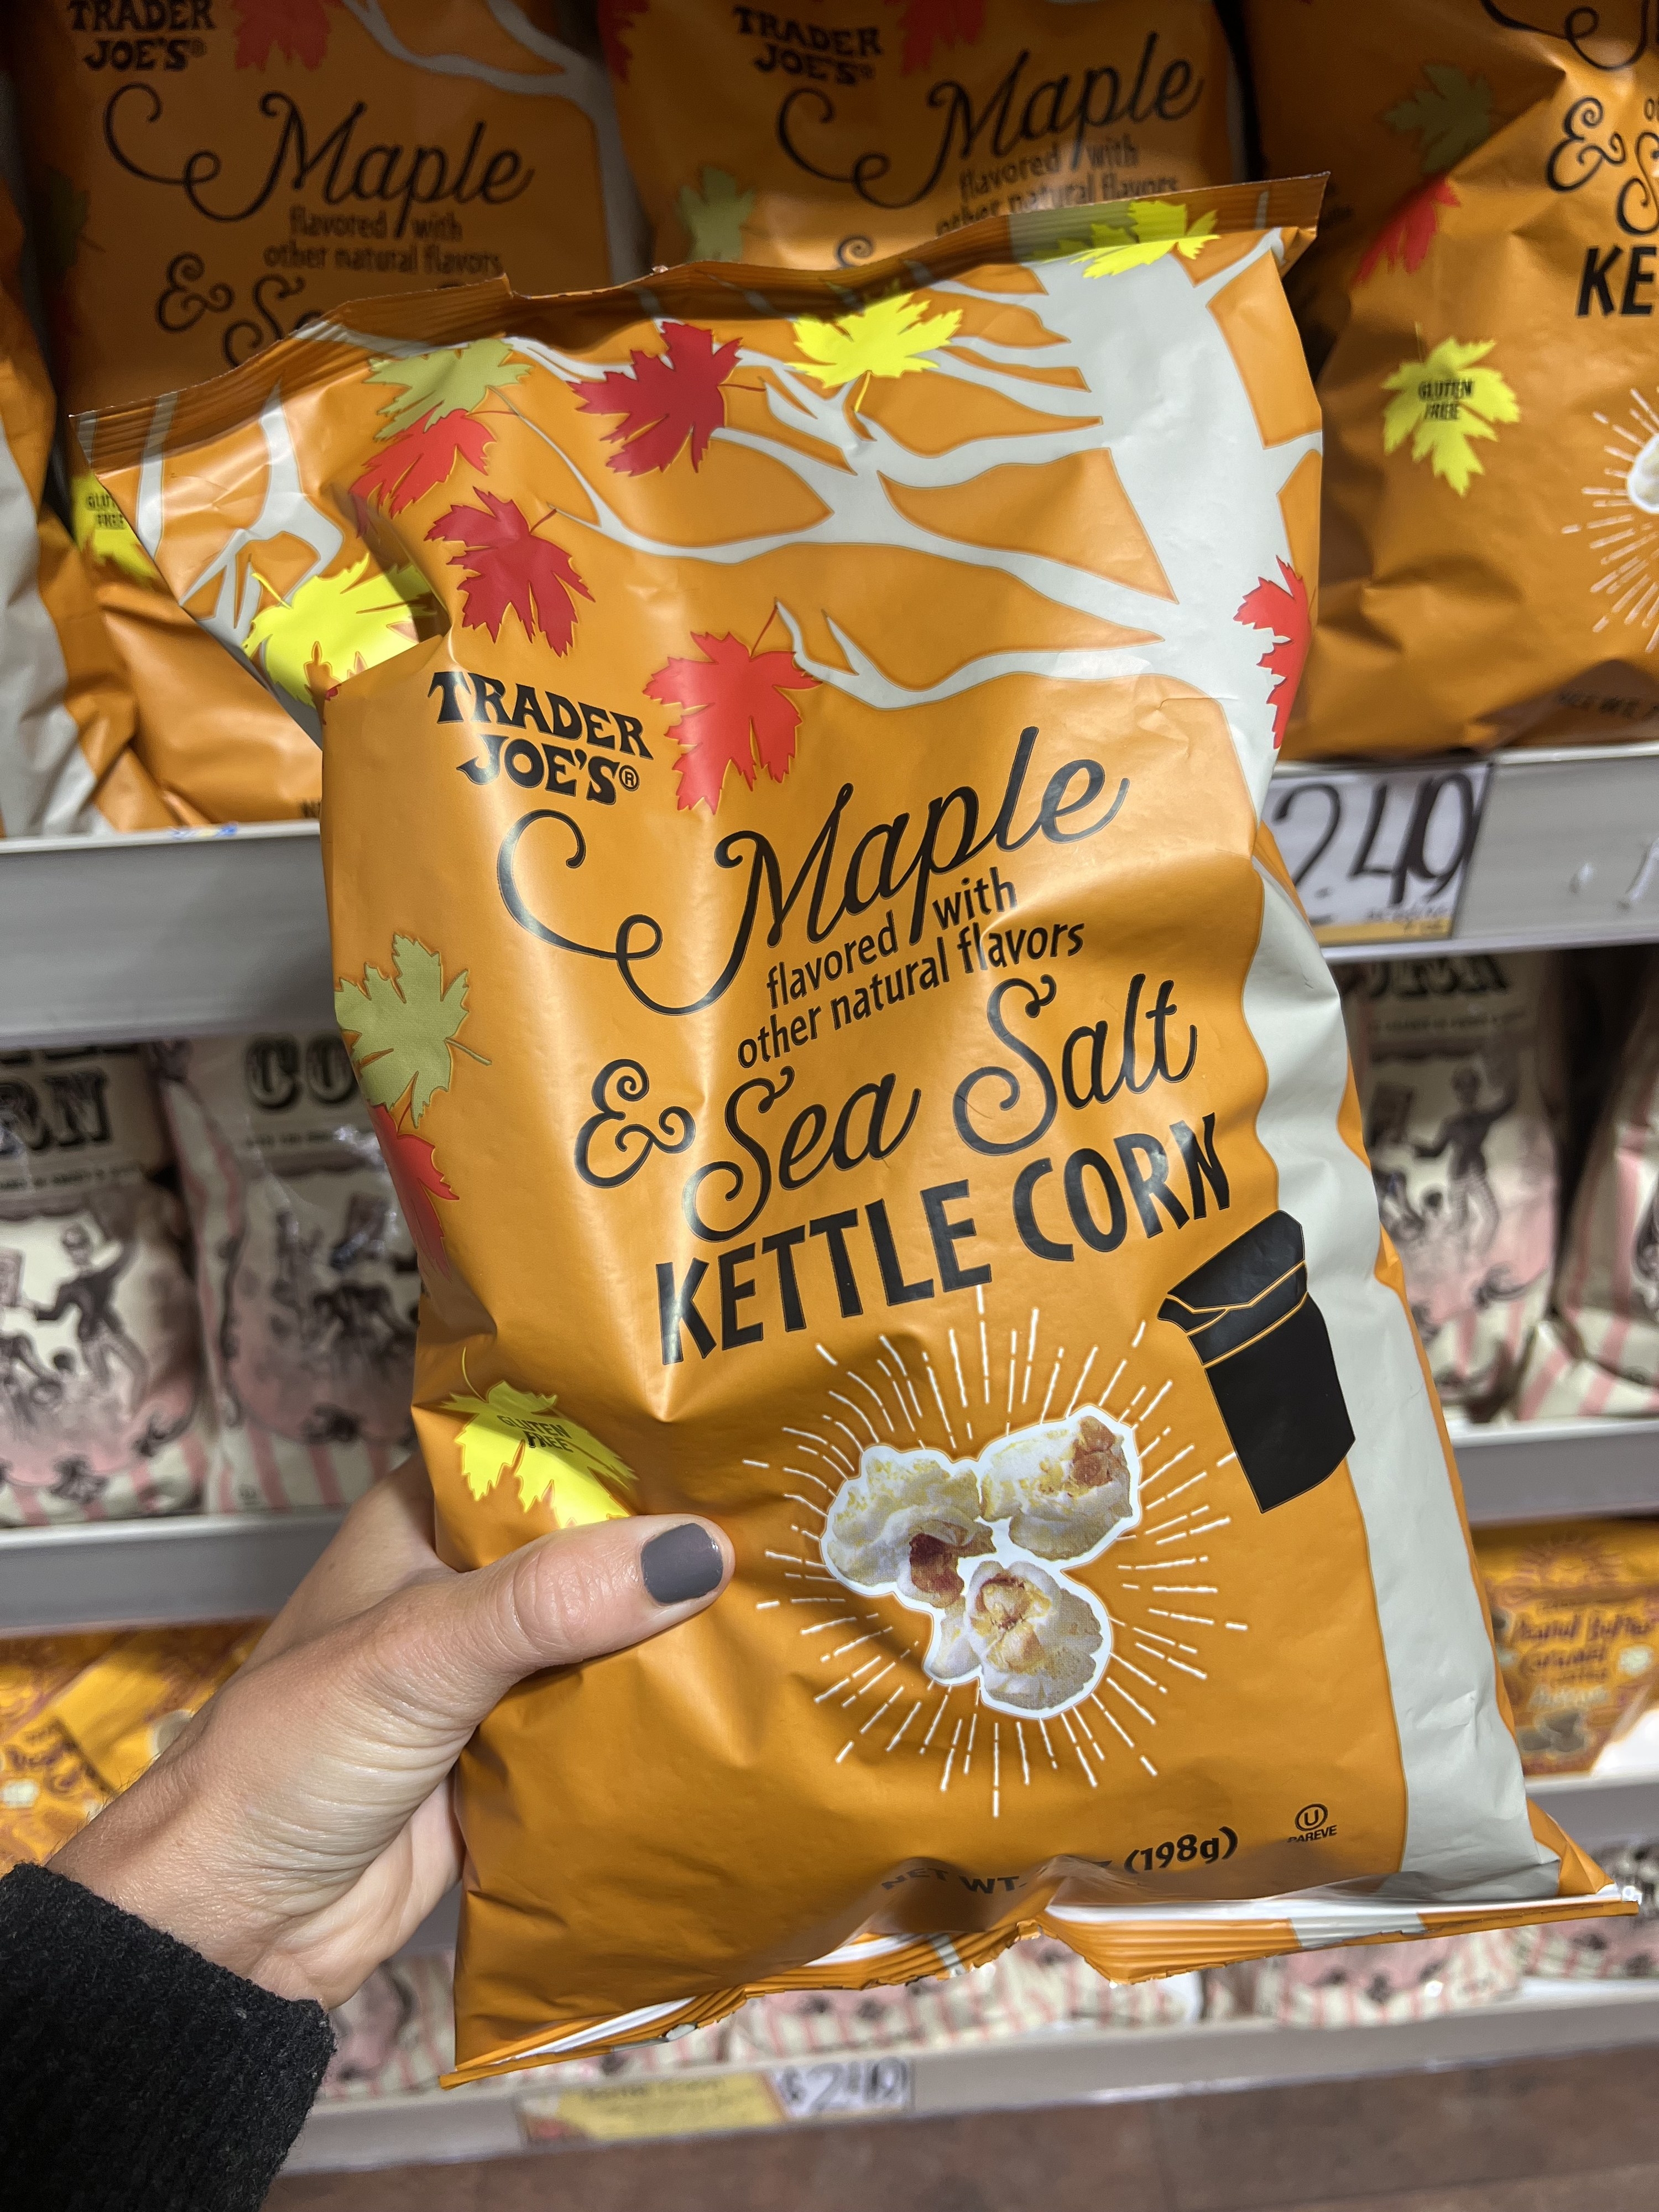 A bag of Maple Sea Salt Kettle Corn